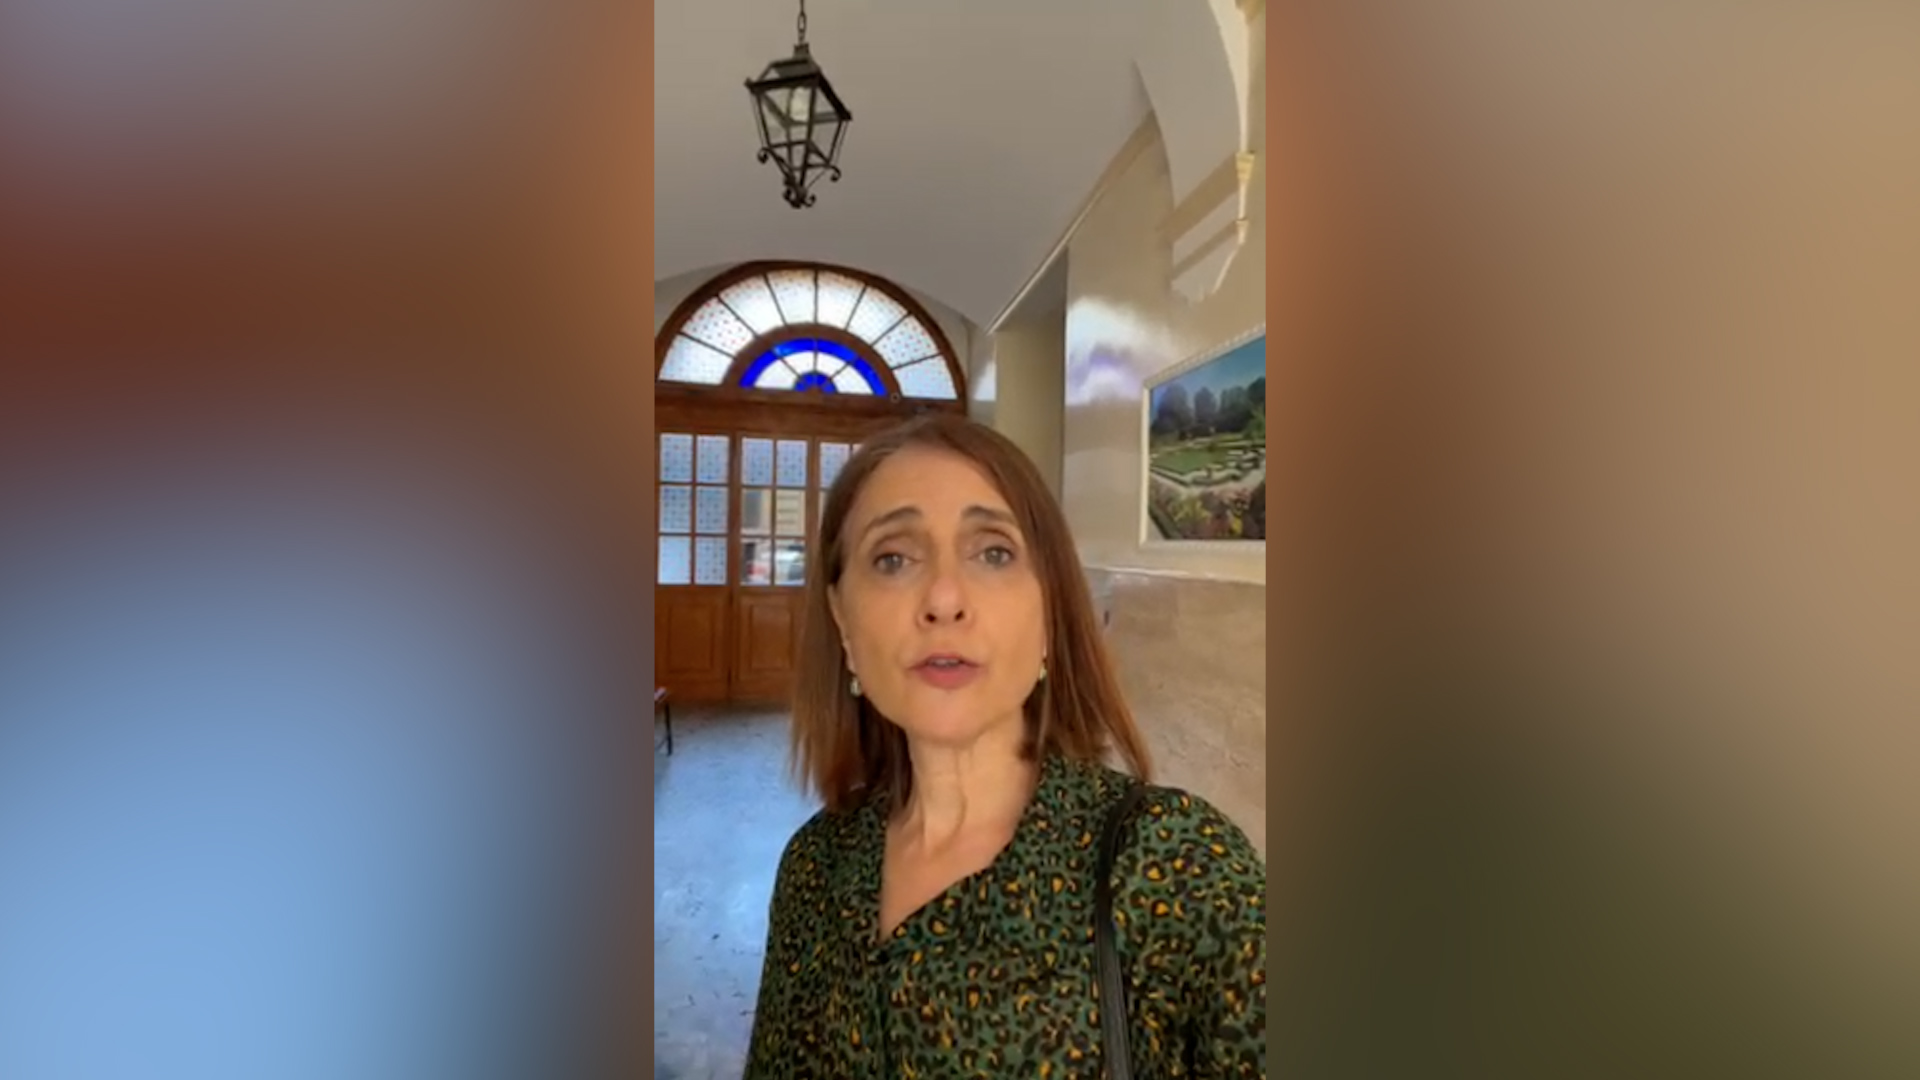 Joyce Ajlouny recording a selfie video indoors